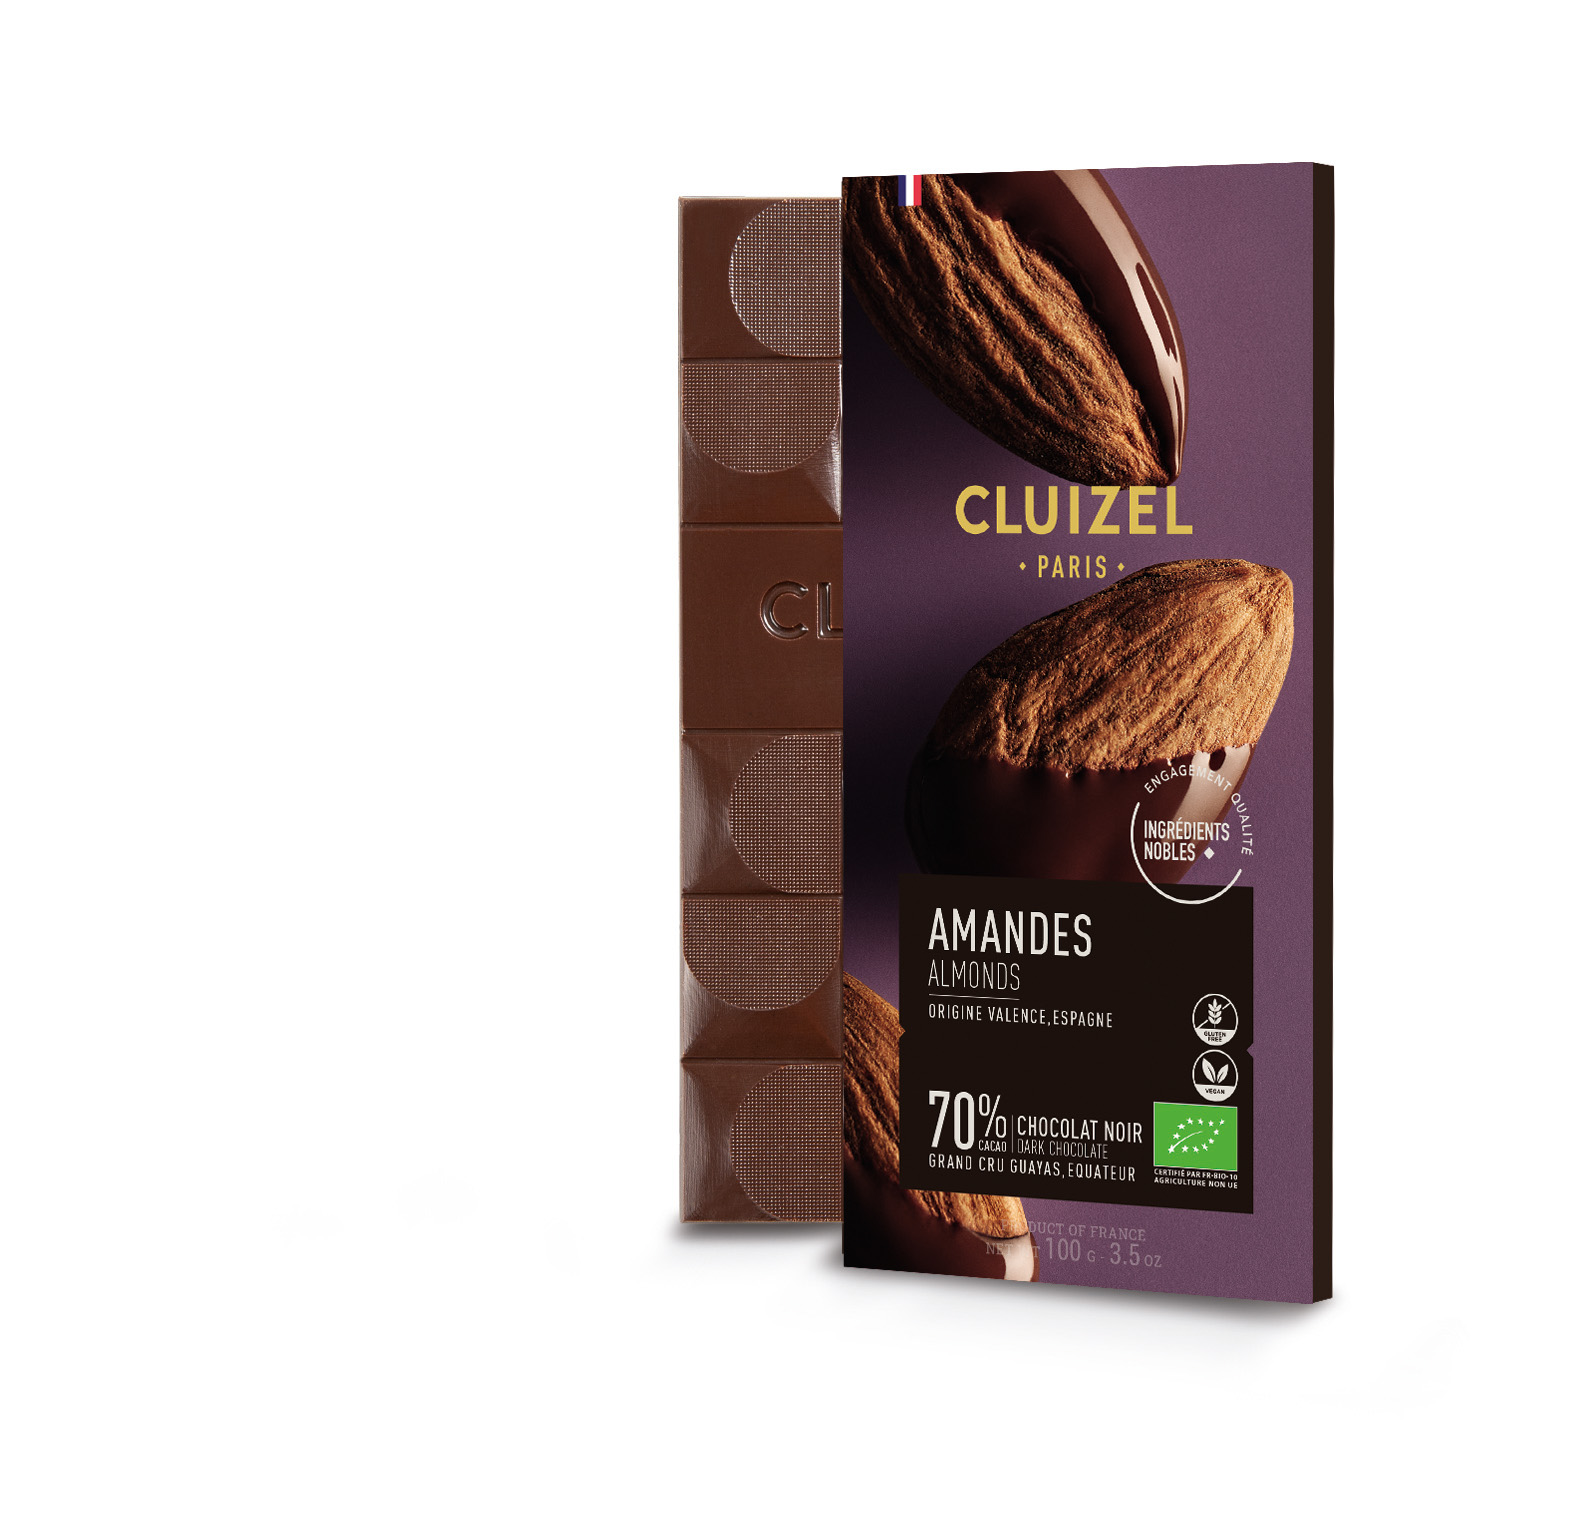 Michel Cluizel Guayas Ecuador Organic 70% Dark Chocolate Bar with Almonds